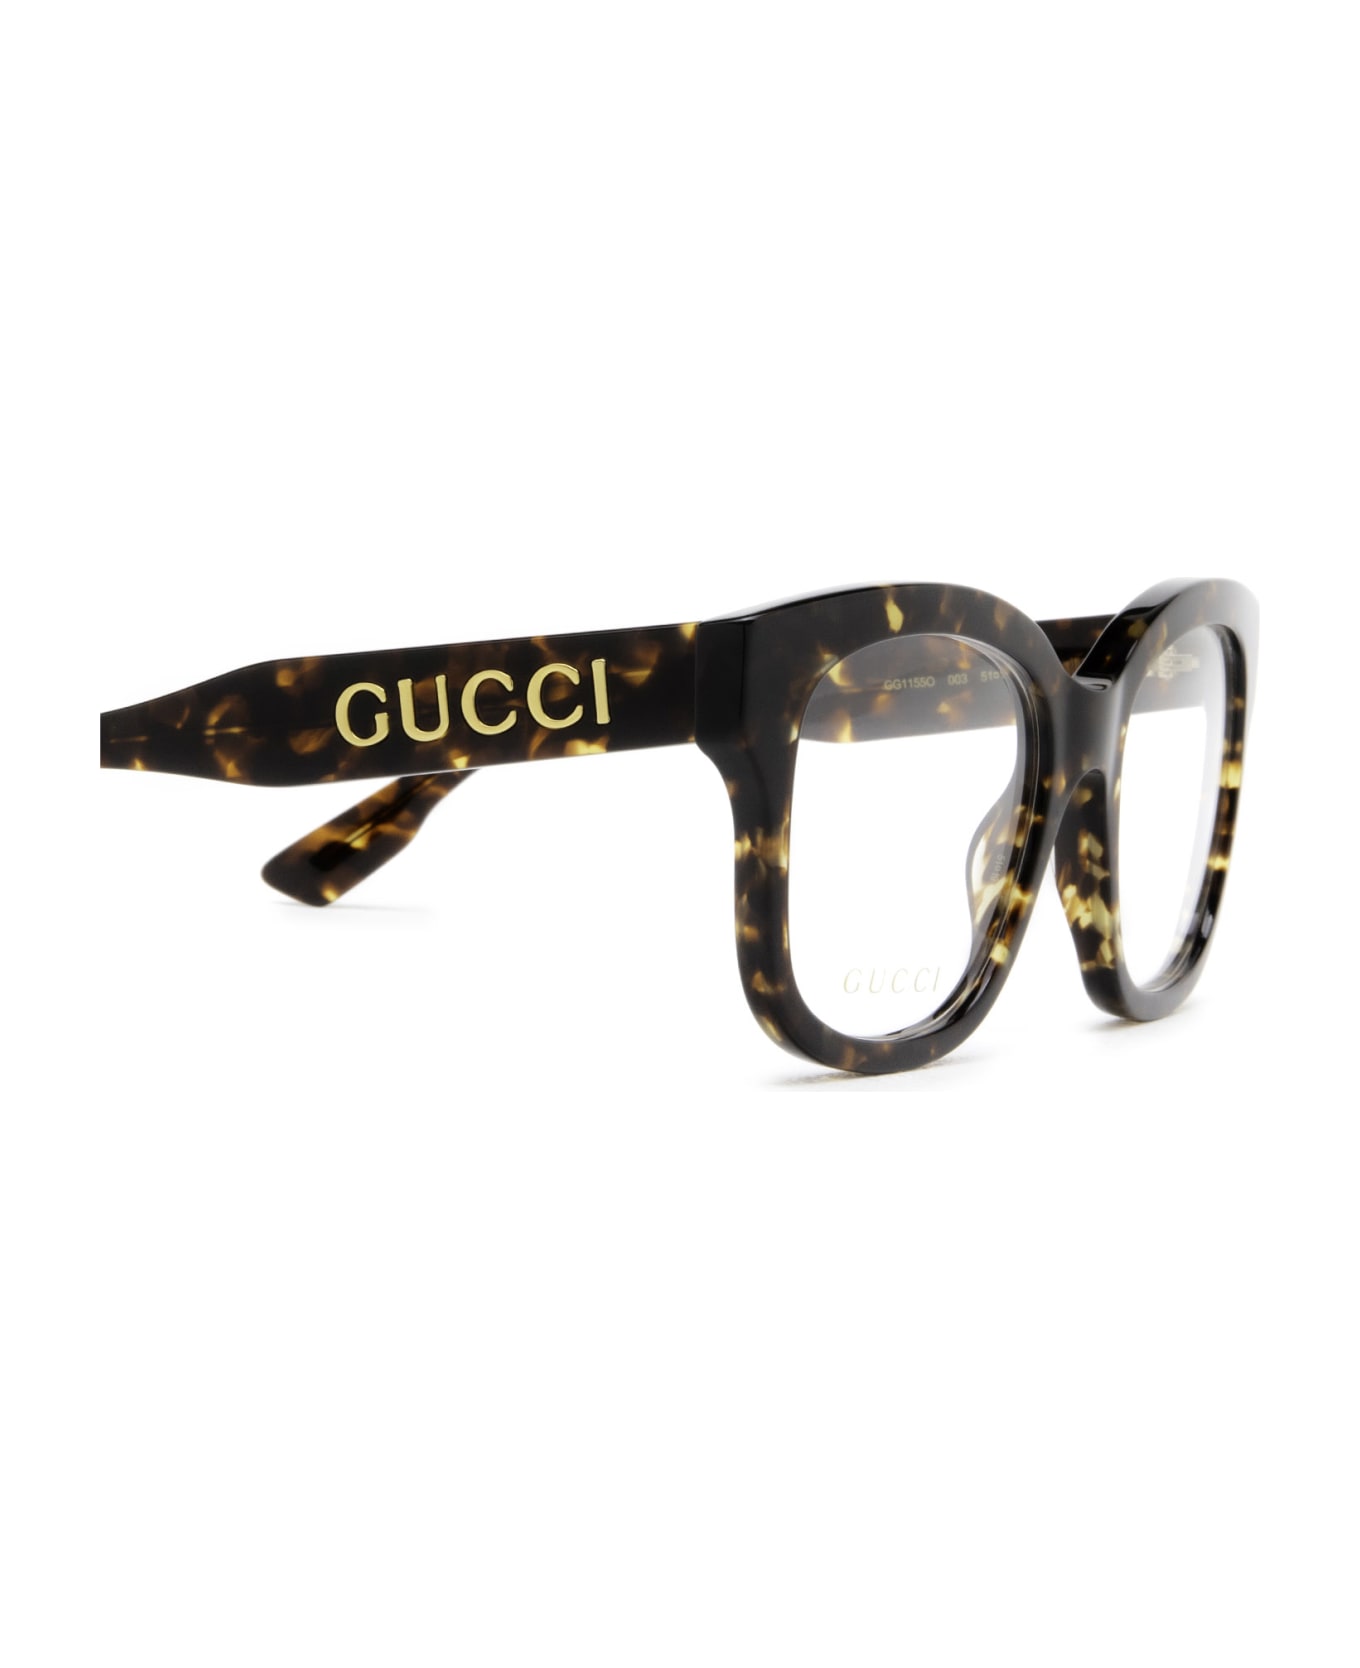 Gucci Eyewear Gg1155o Havana Glasses - Havana アイウェア